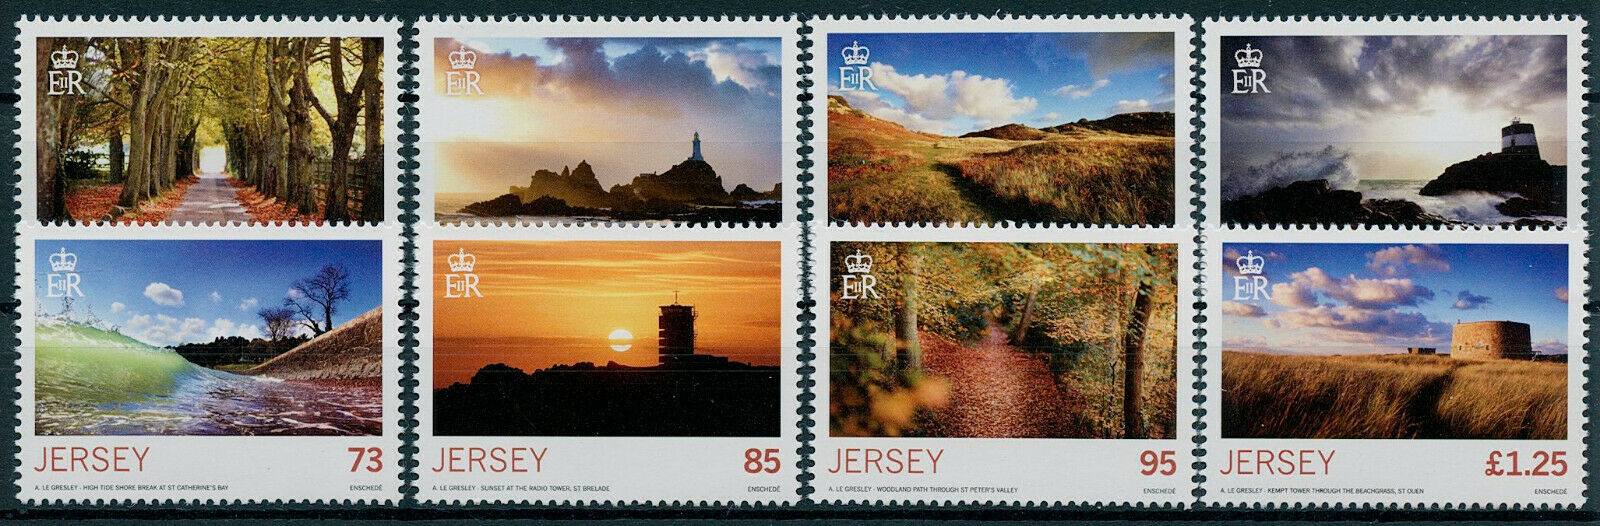 Jersey 2015 MNH Landscapes Stamps Seasons Autumn Trees Architecture 8v Set